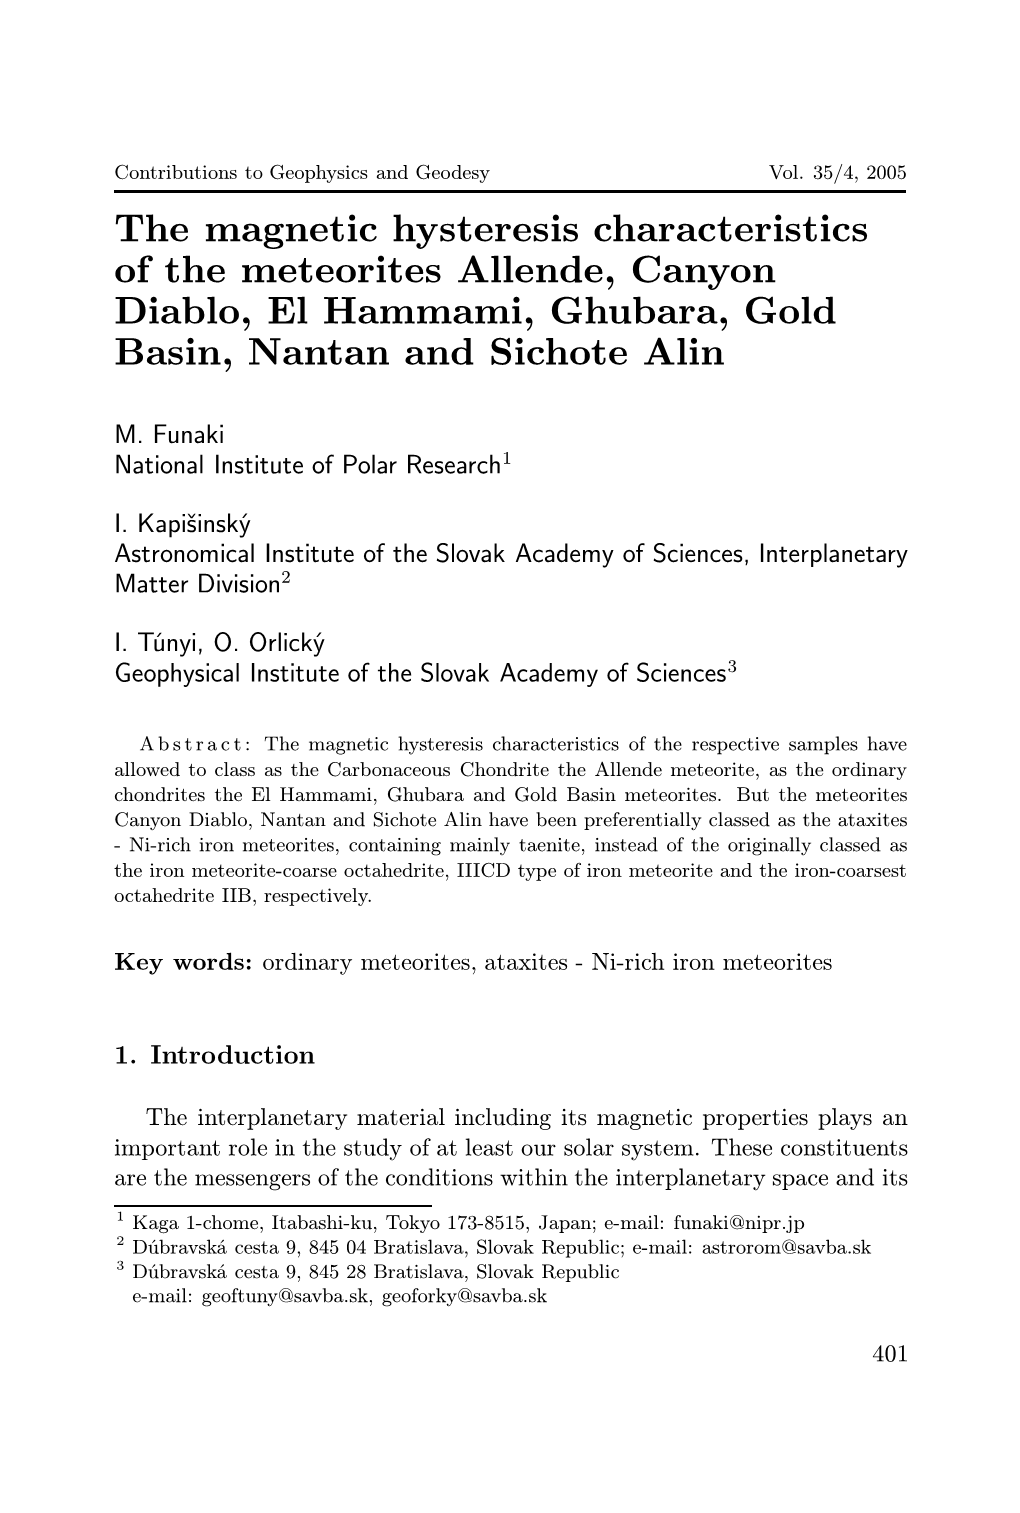 The Magnetic Hysteresis Characteristics of the Meteorites Allende, Canyon Diablo, El Hammami, Ghubara, Gold Basin, Nantan and Sichote Alin